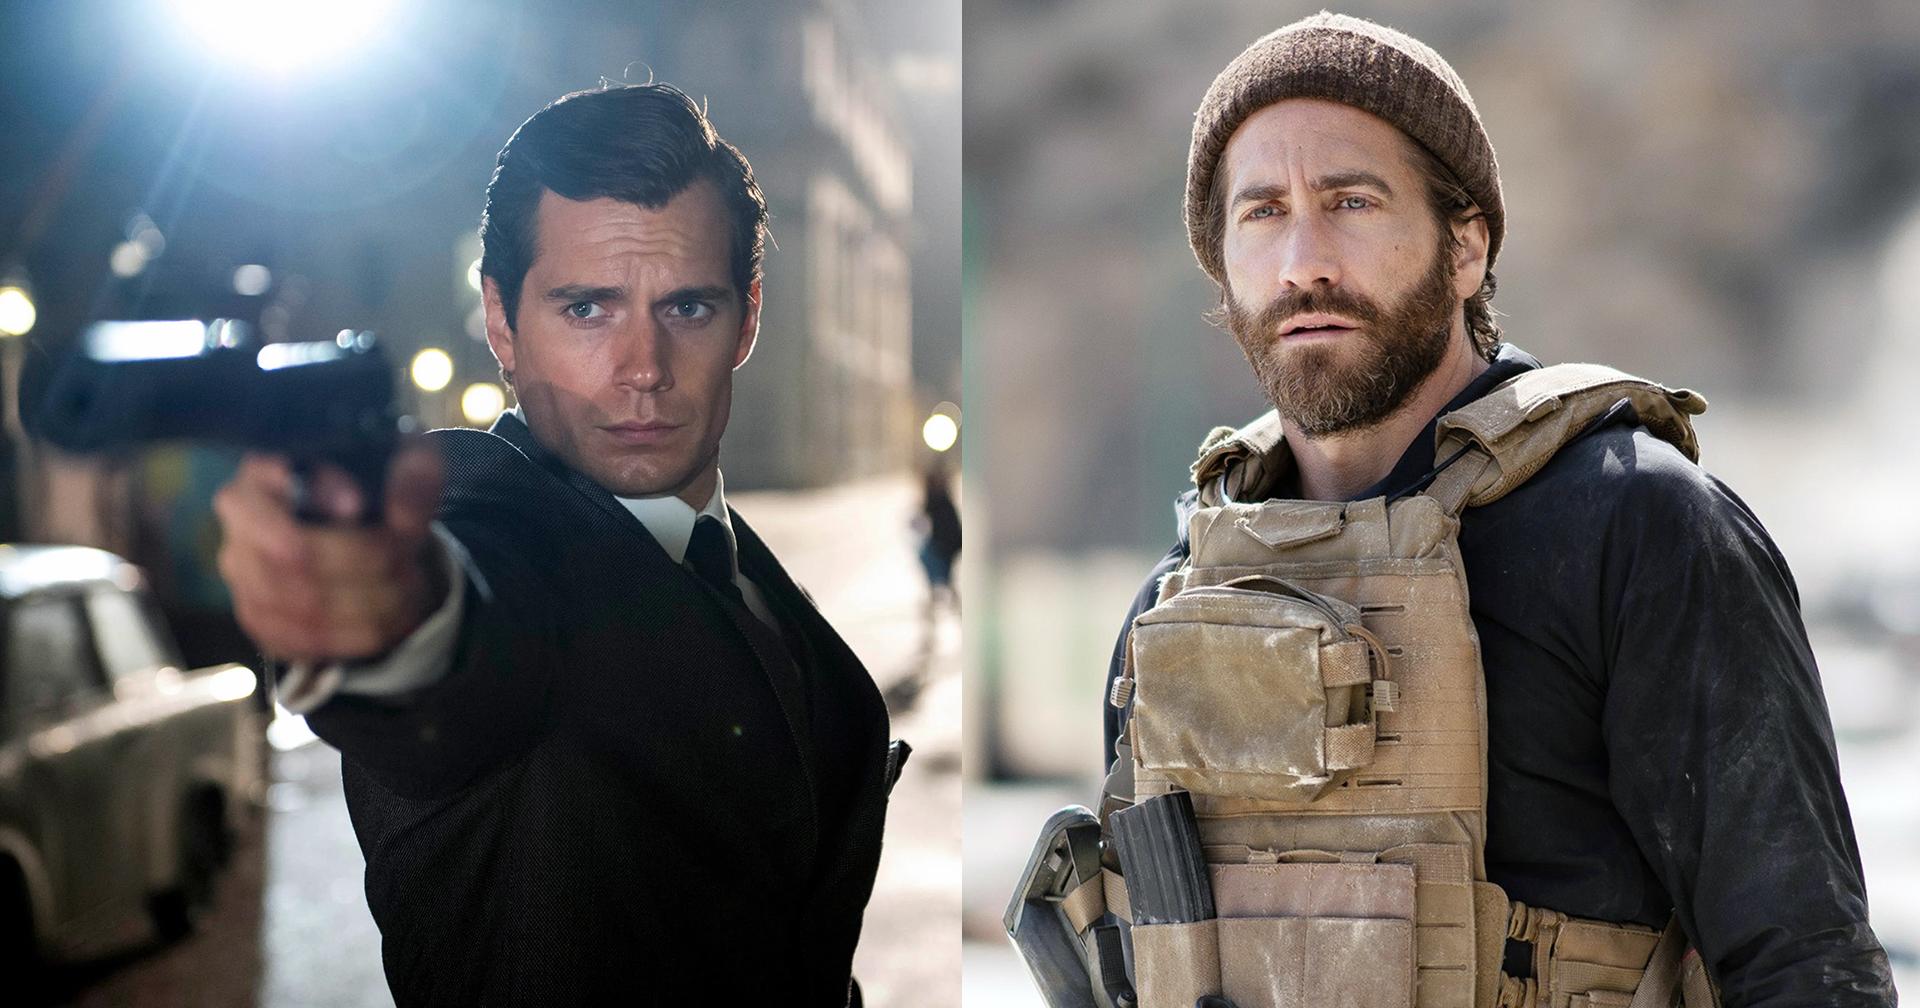 Henry Cavill, Jake Gyllenhaal และ Eiza González จะกลับมาร่วมงานกับ Guy Ritchie ในหนังแอ็กชันใหม่